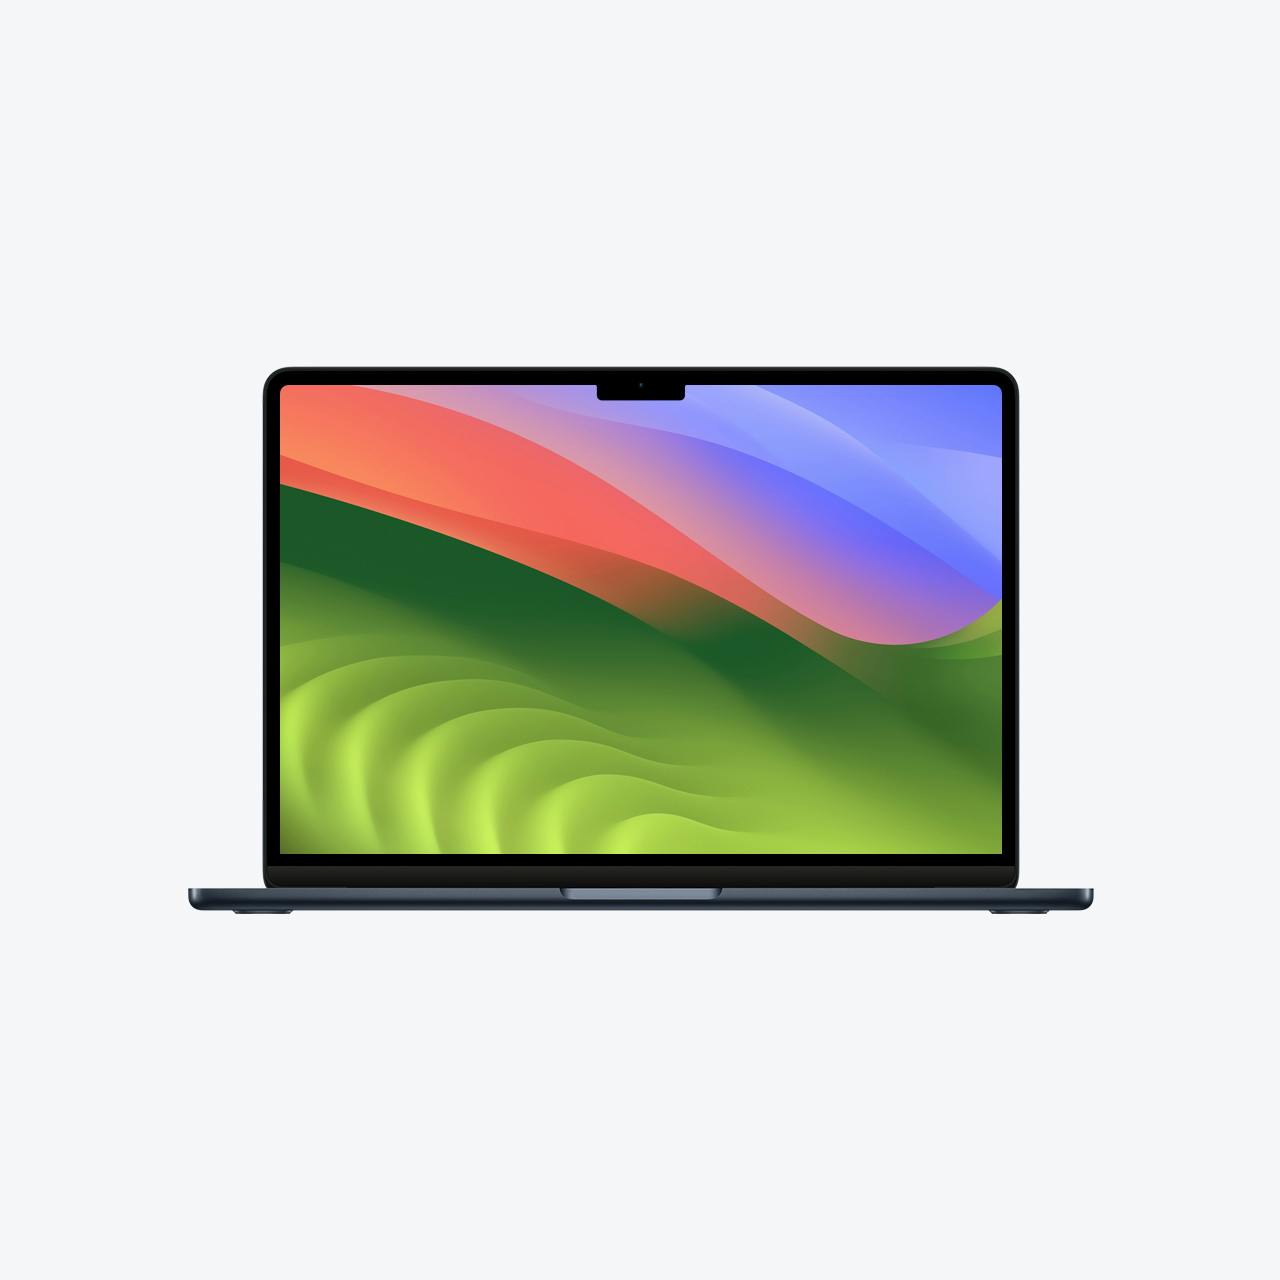 Image of a MacBook Air